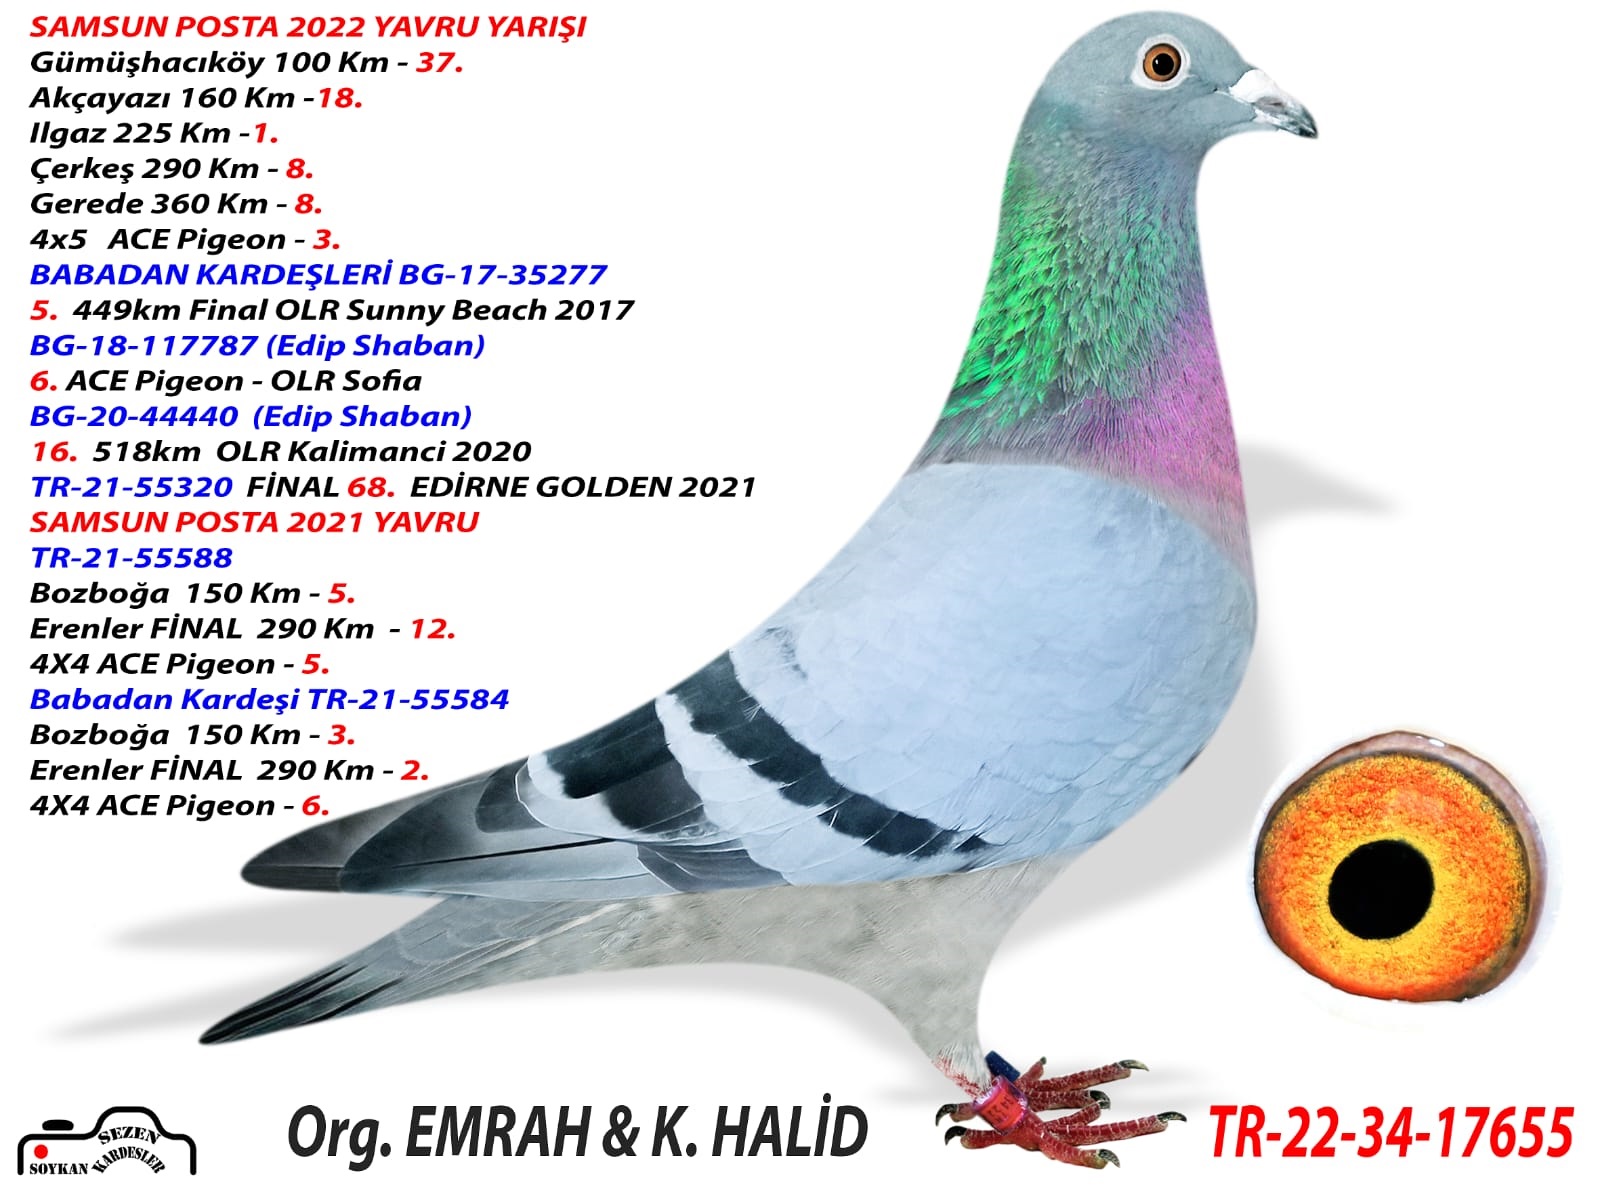 TR22-34-17605  /	TEAM SAMSUN  -  251. FİMAL 